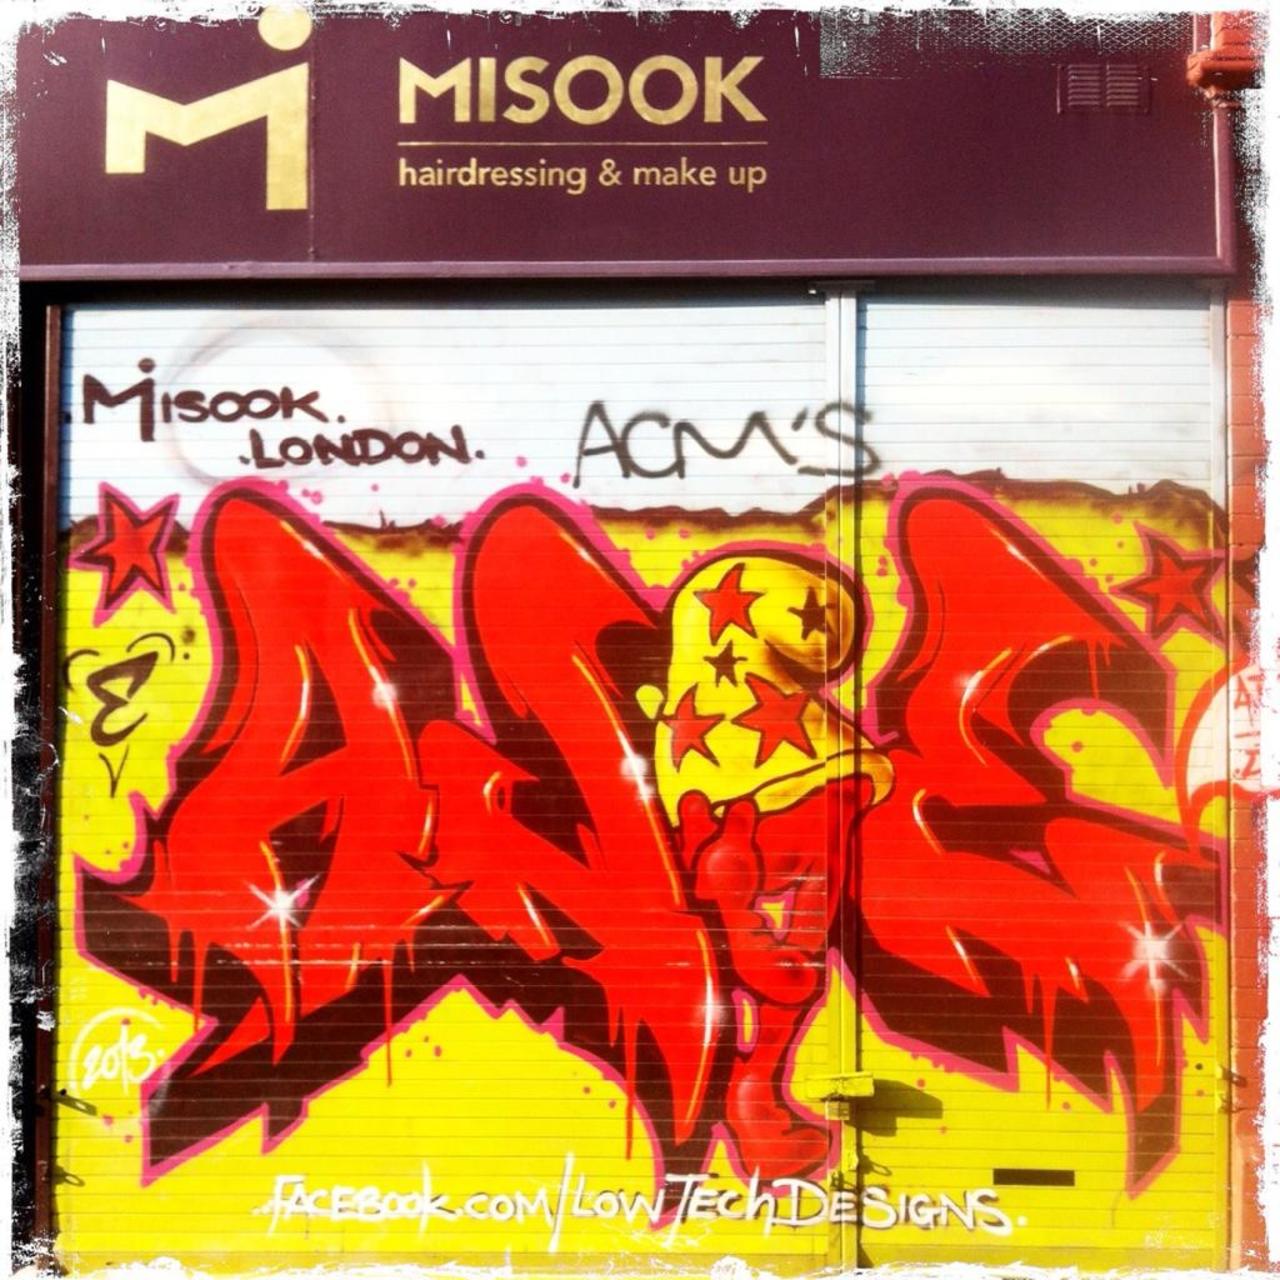 MISOOK | Fashion Street shop front streetart  #graffiti #art http://t.co/7qPWUgfcEx